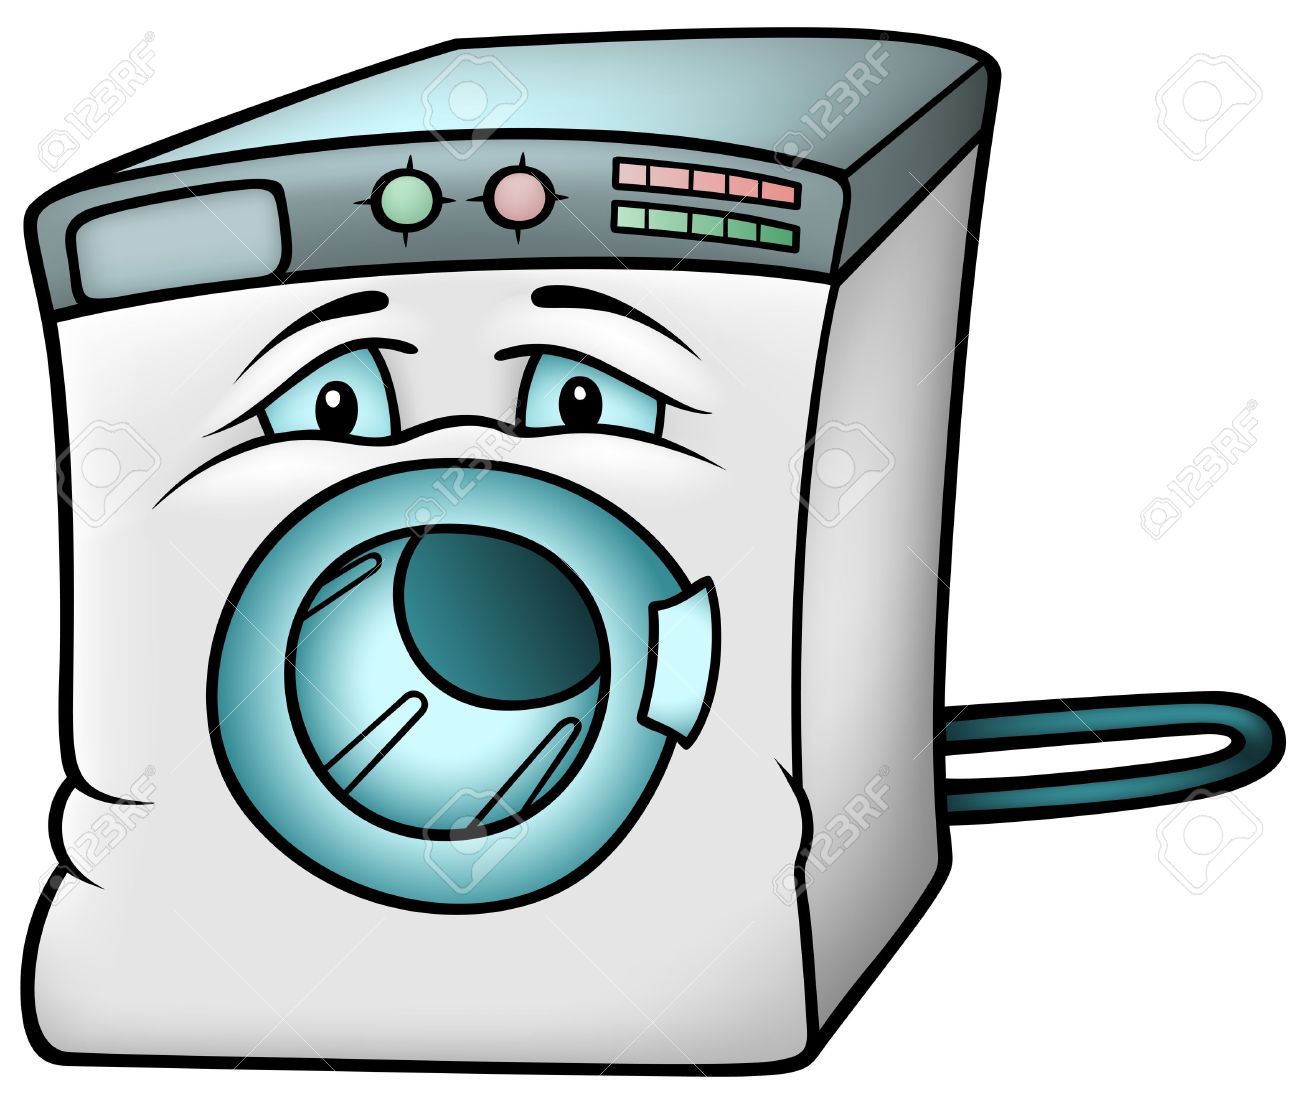 Clip art of a washing machine